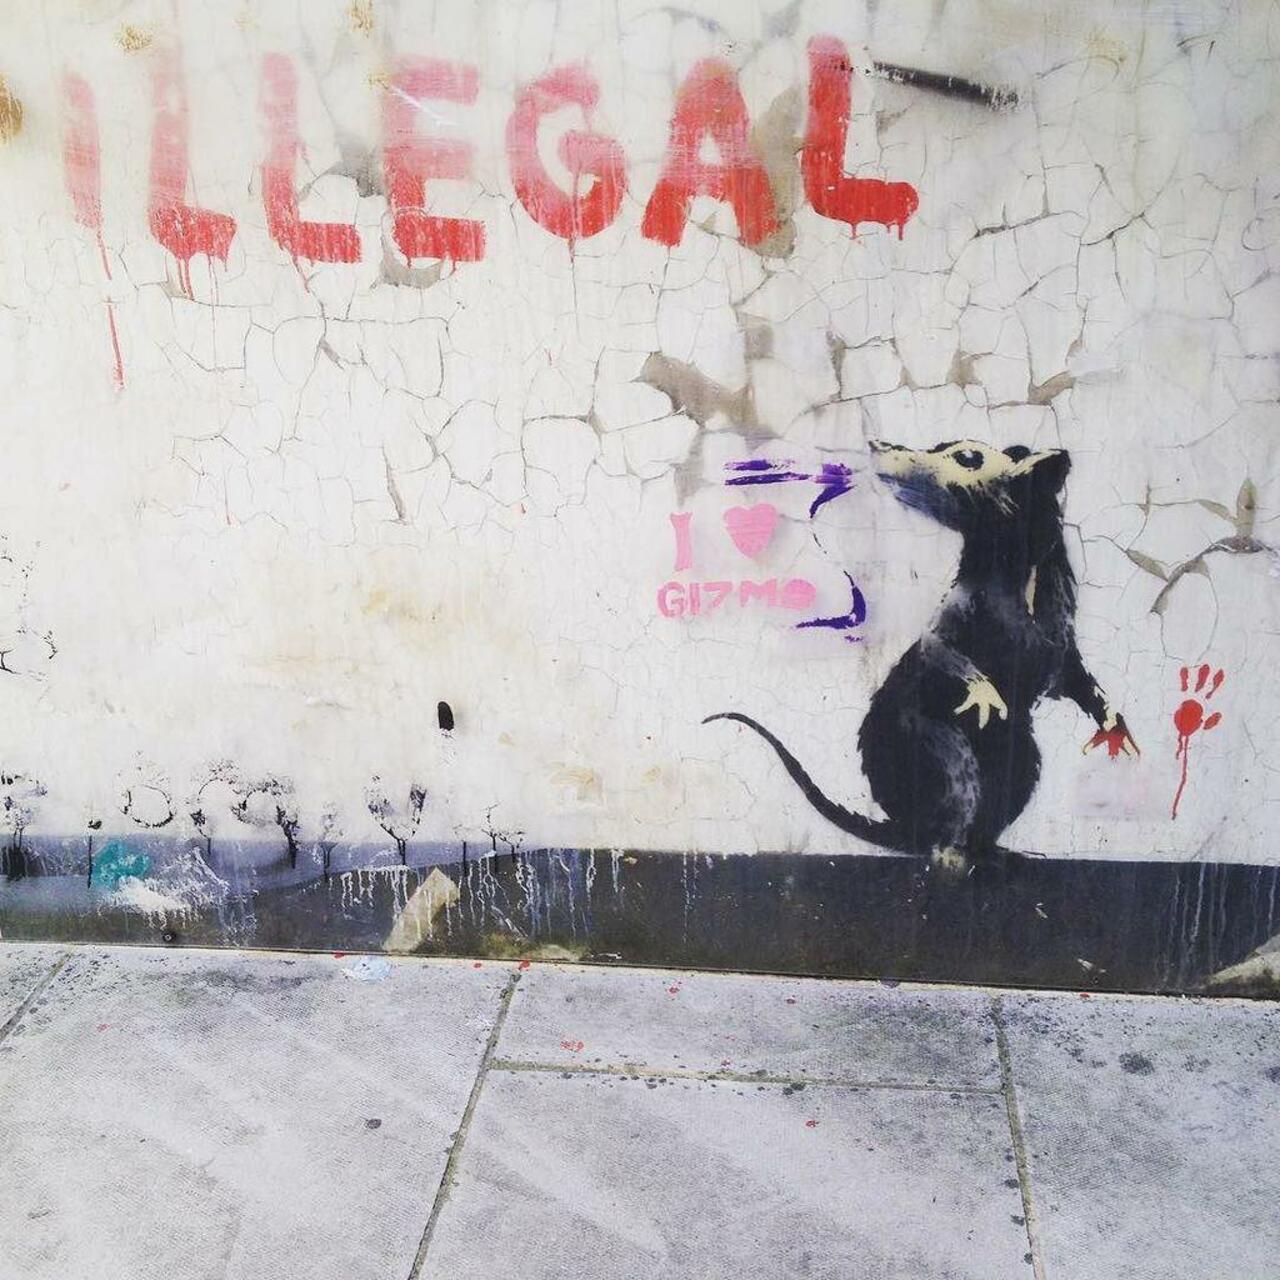 Illegal rat. #graffiti #streetart #streetartlondon #Banksy by isadarko http://t.co/wyTS8VZGkB